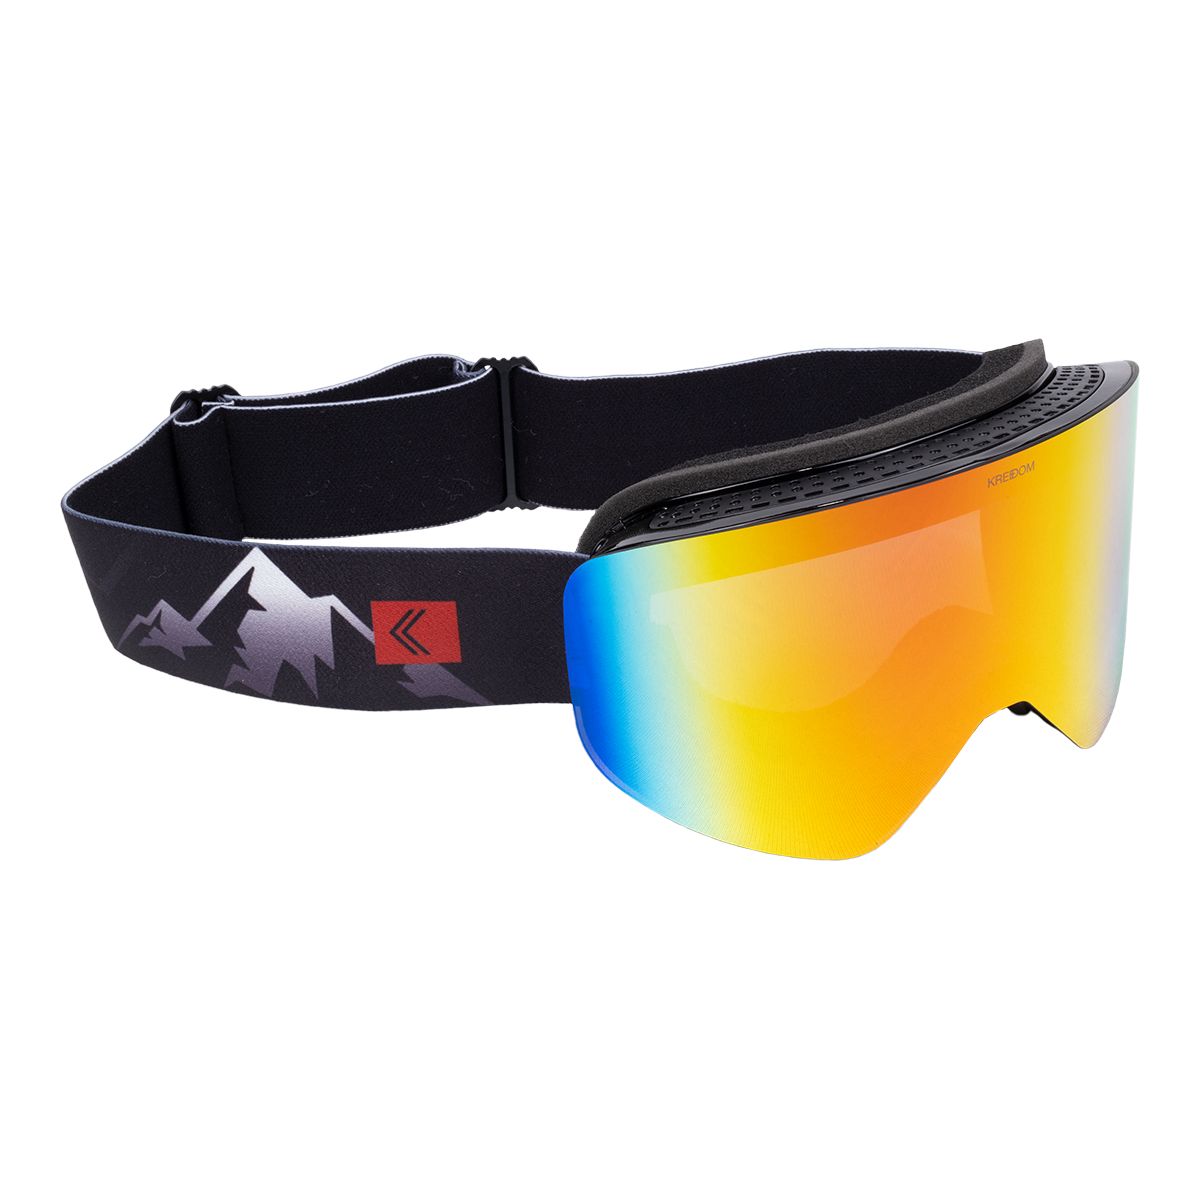 Kreedom Shred Horn Ski & Snowboard Goggles